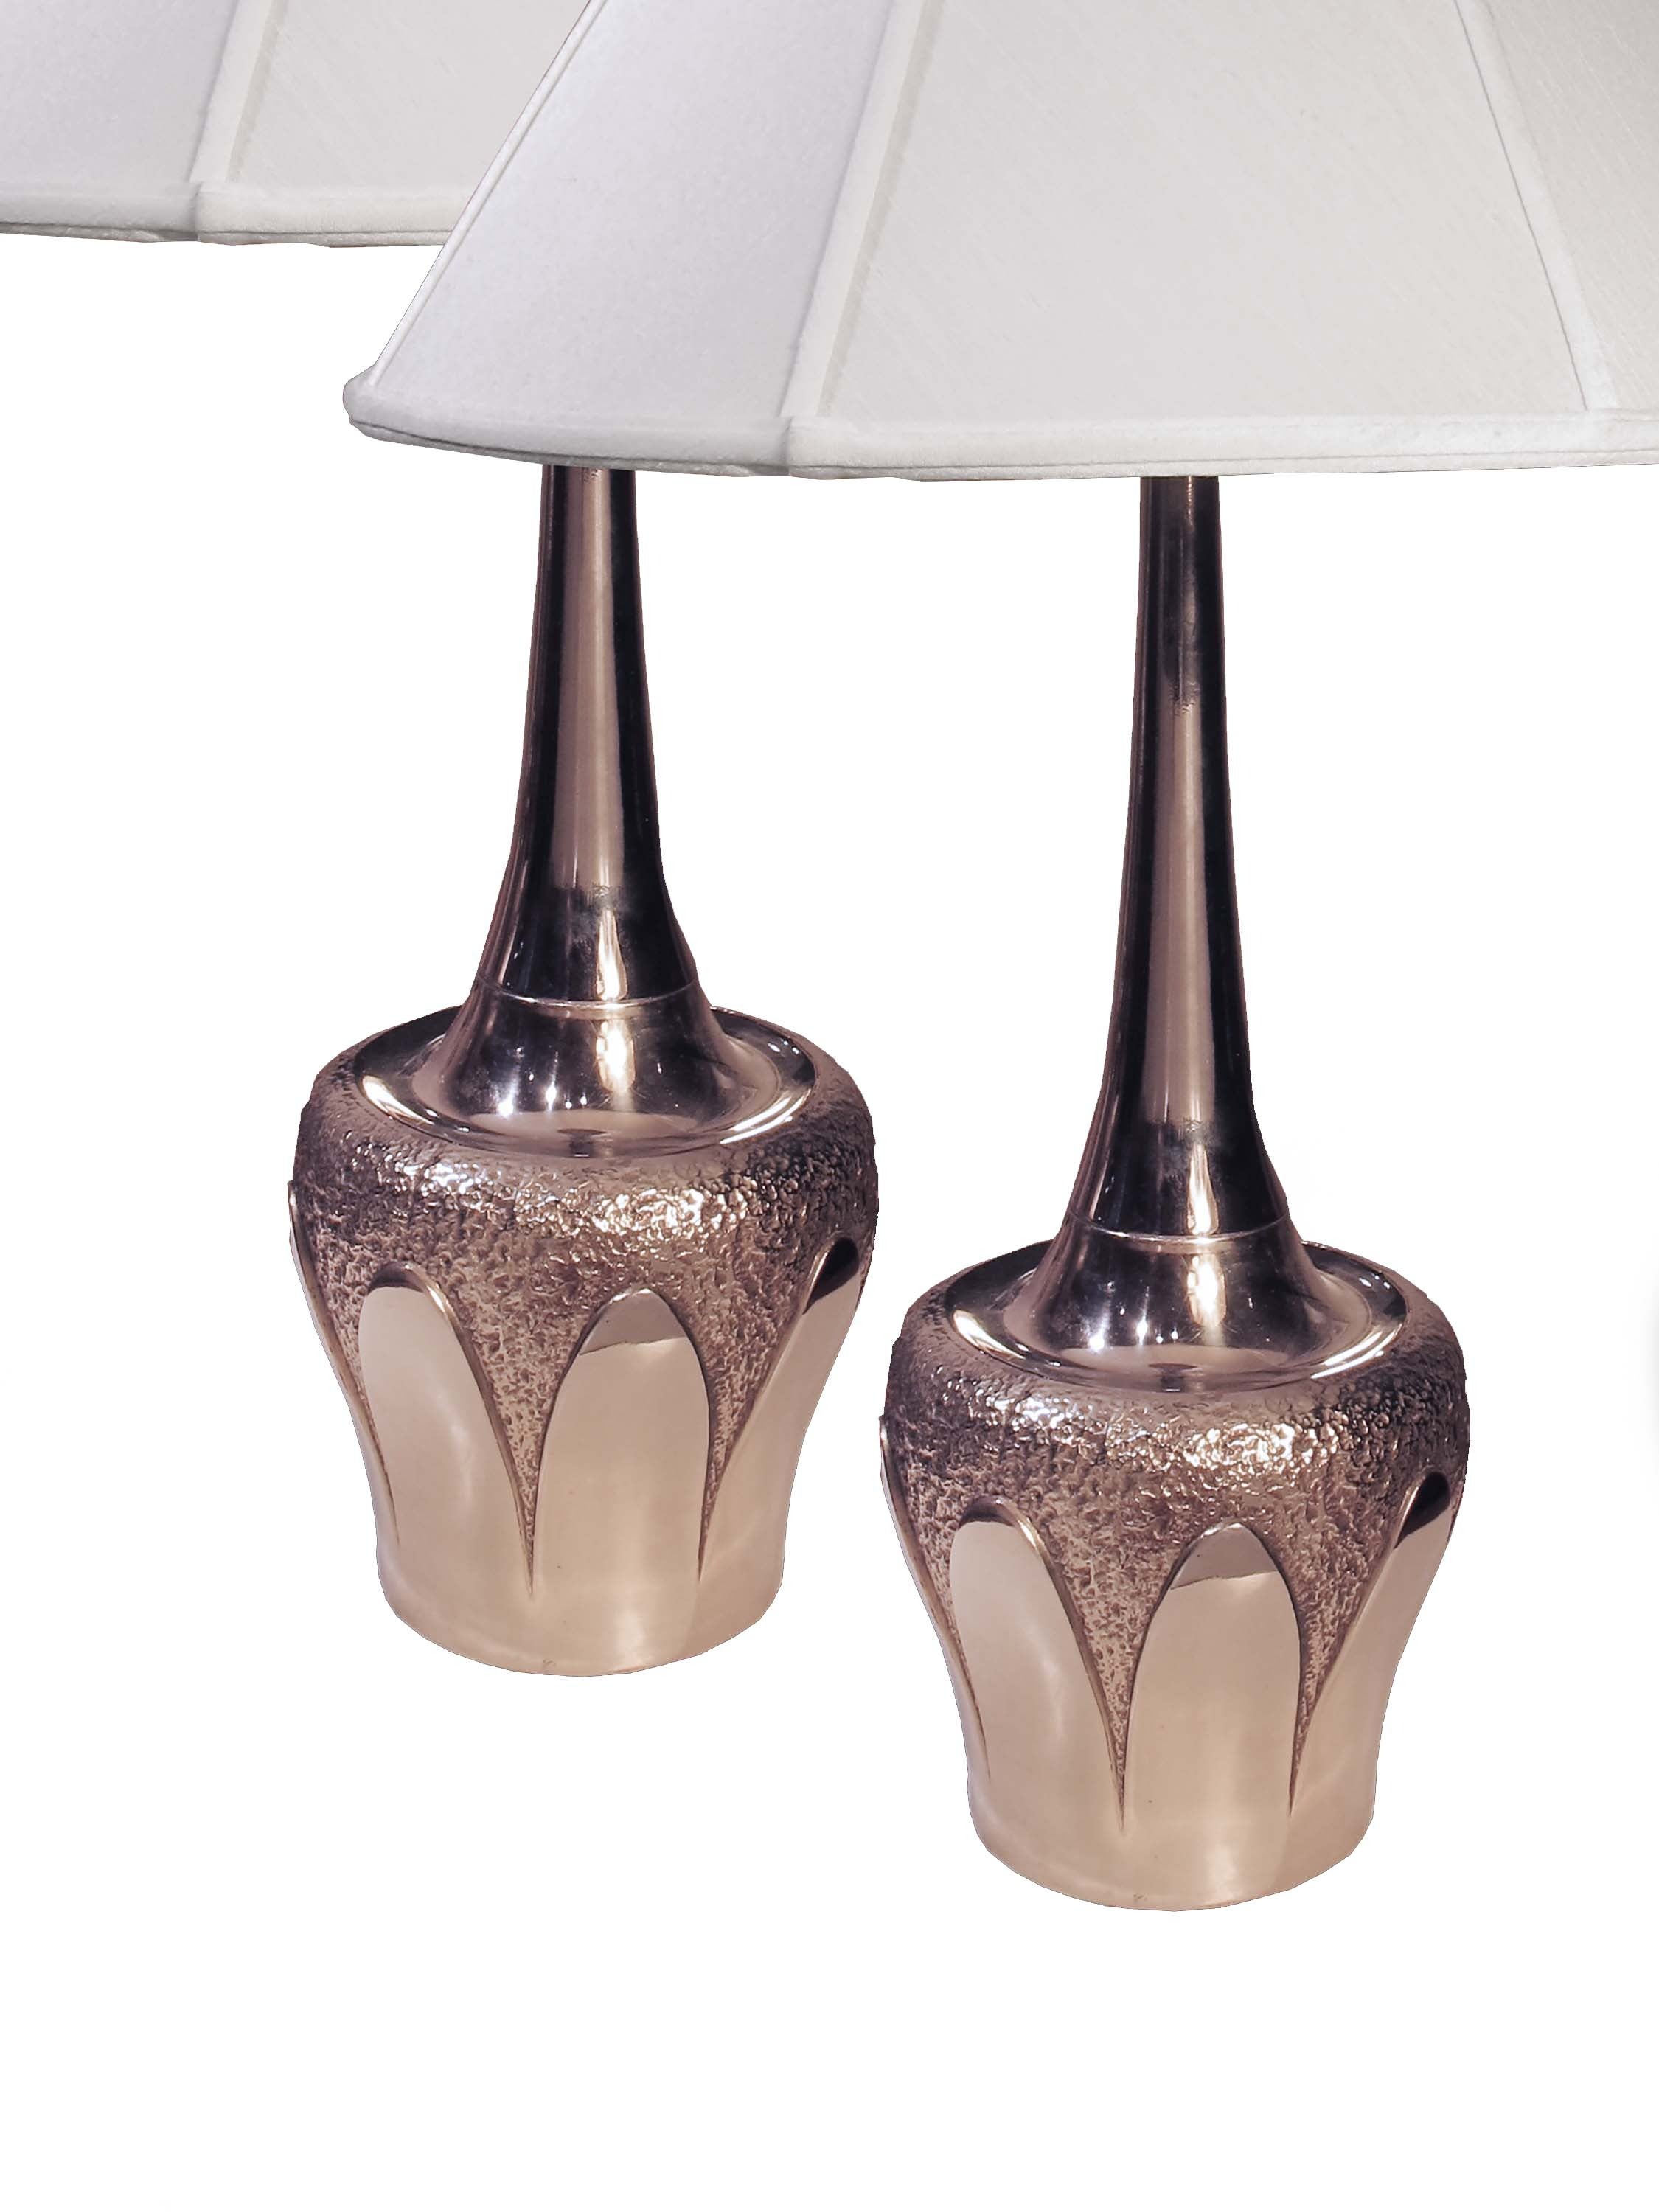 Pair of Mid Century Glazed Ceramic Table Lamps circa 1960